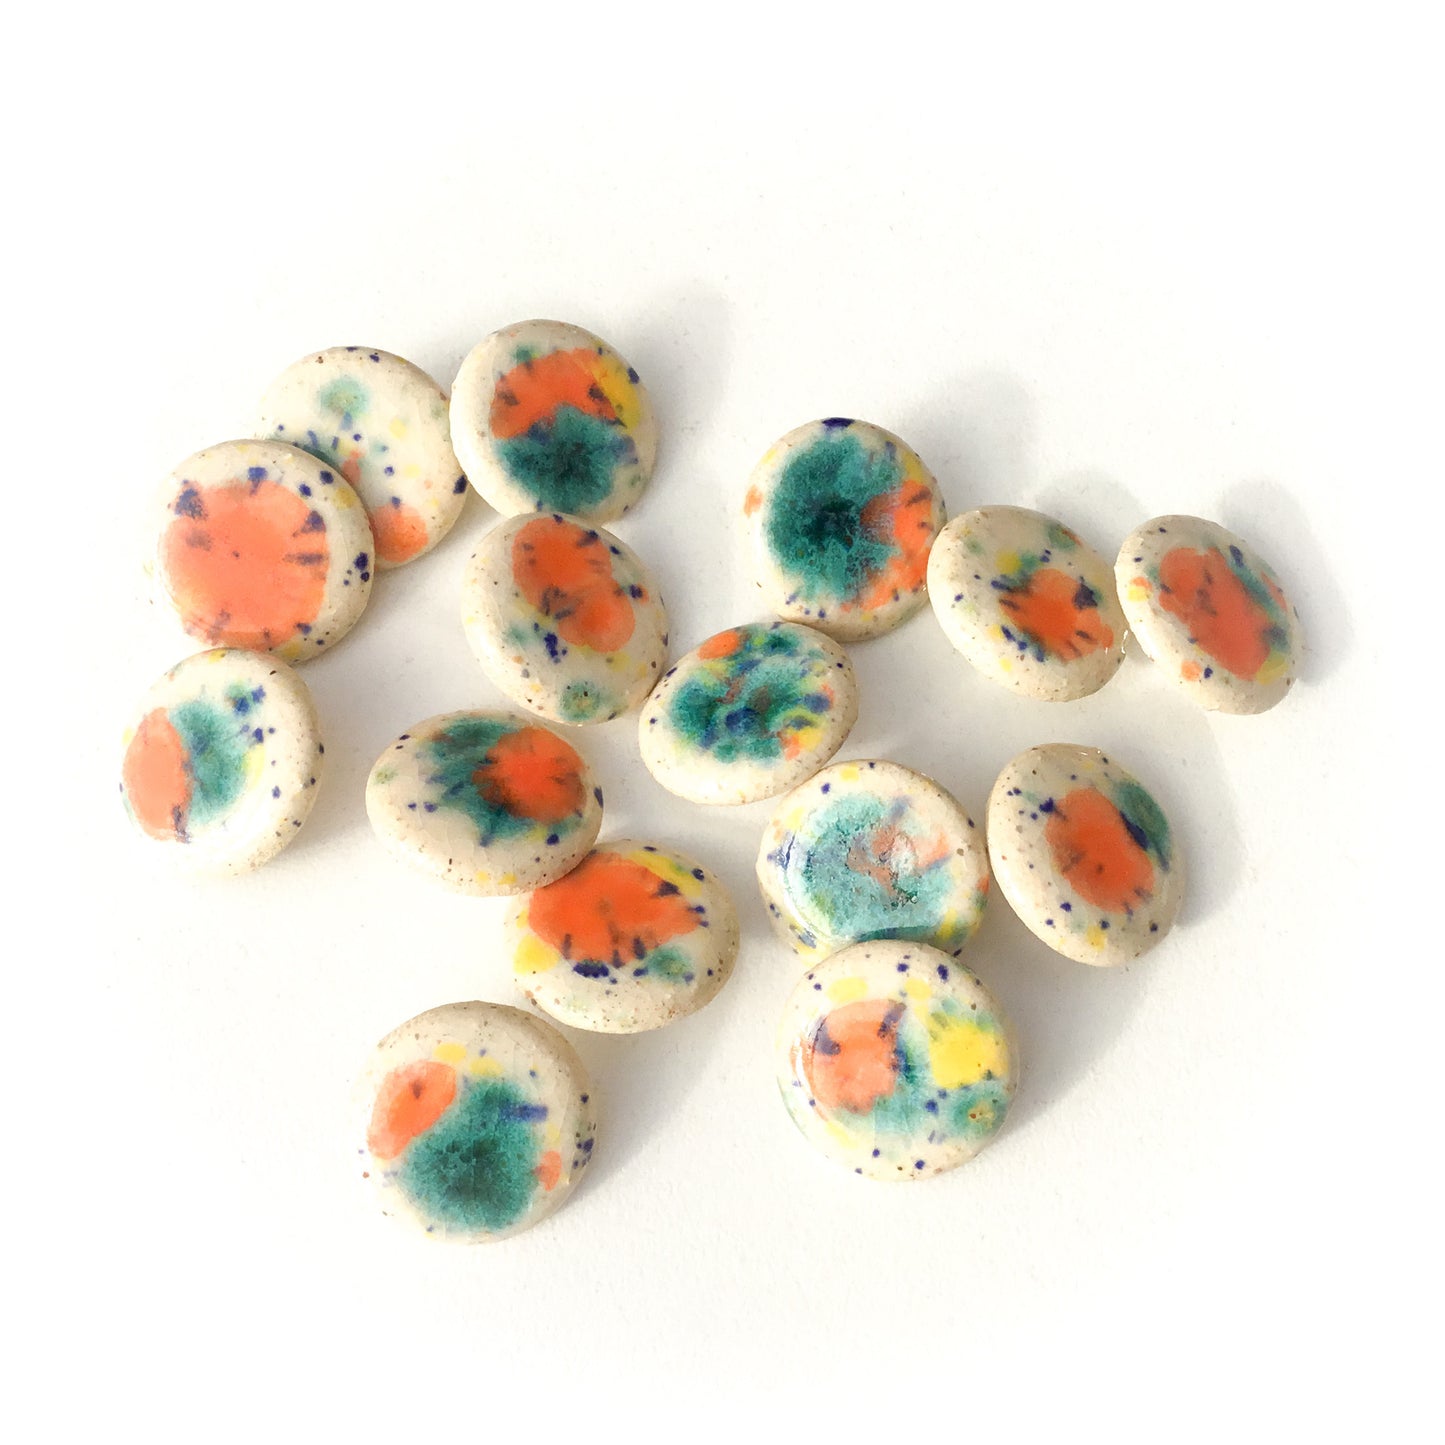 Vibrant Color Burst Ceramic Shank Buttons - 11/16"